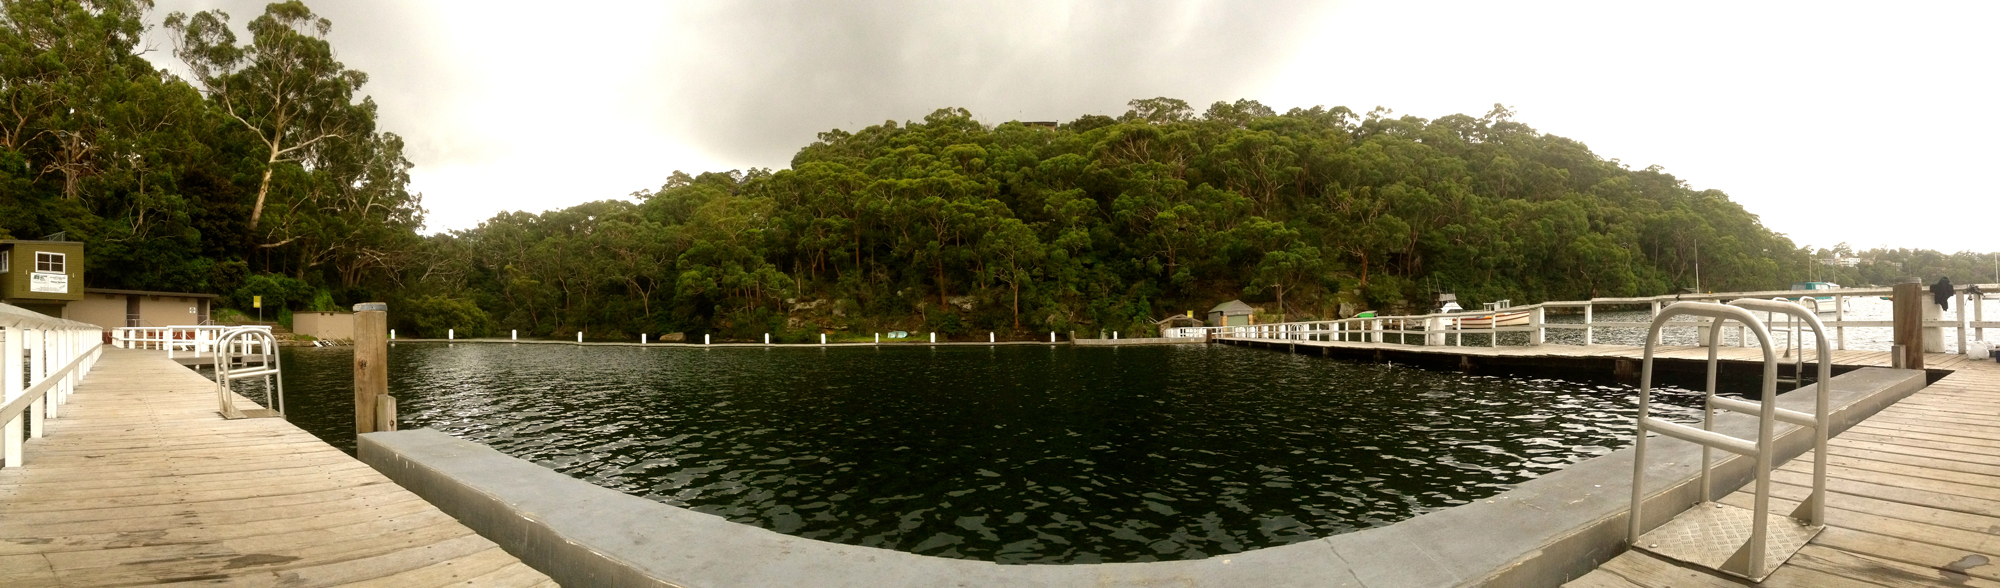 Gymea Bay baths panorama - 1000pools